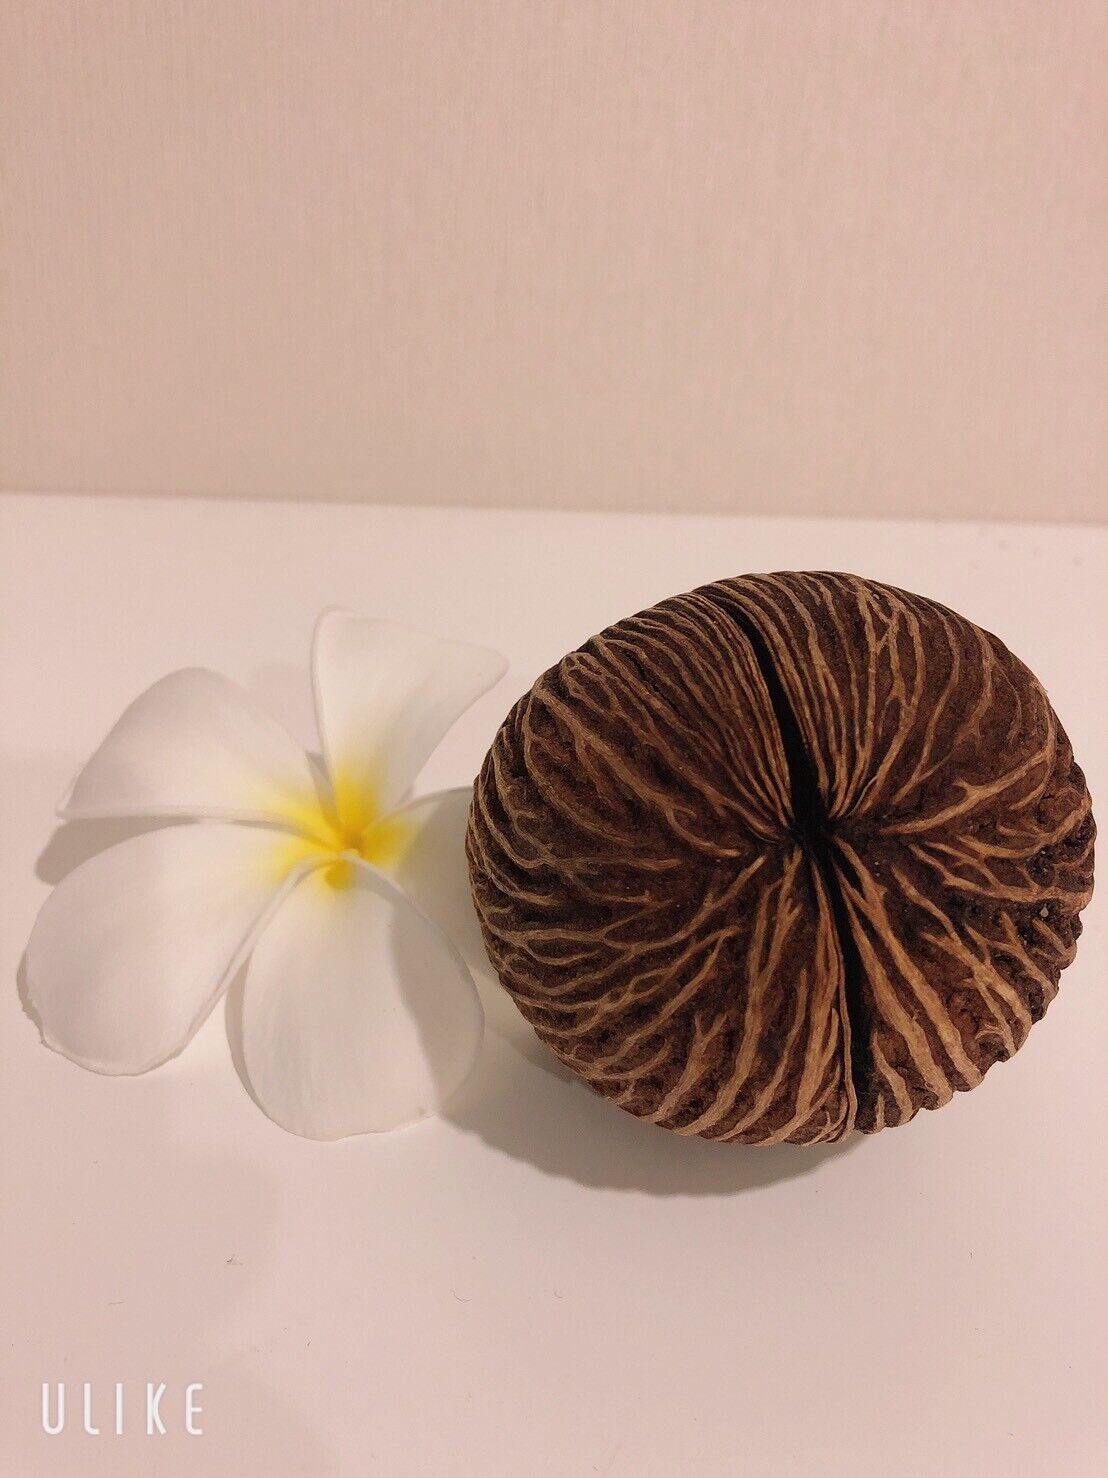 Cerbera Odollam  Pong Pong Wood For Decoration  Handmade